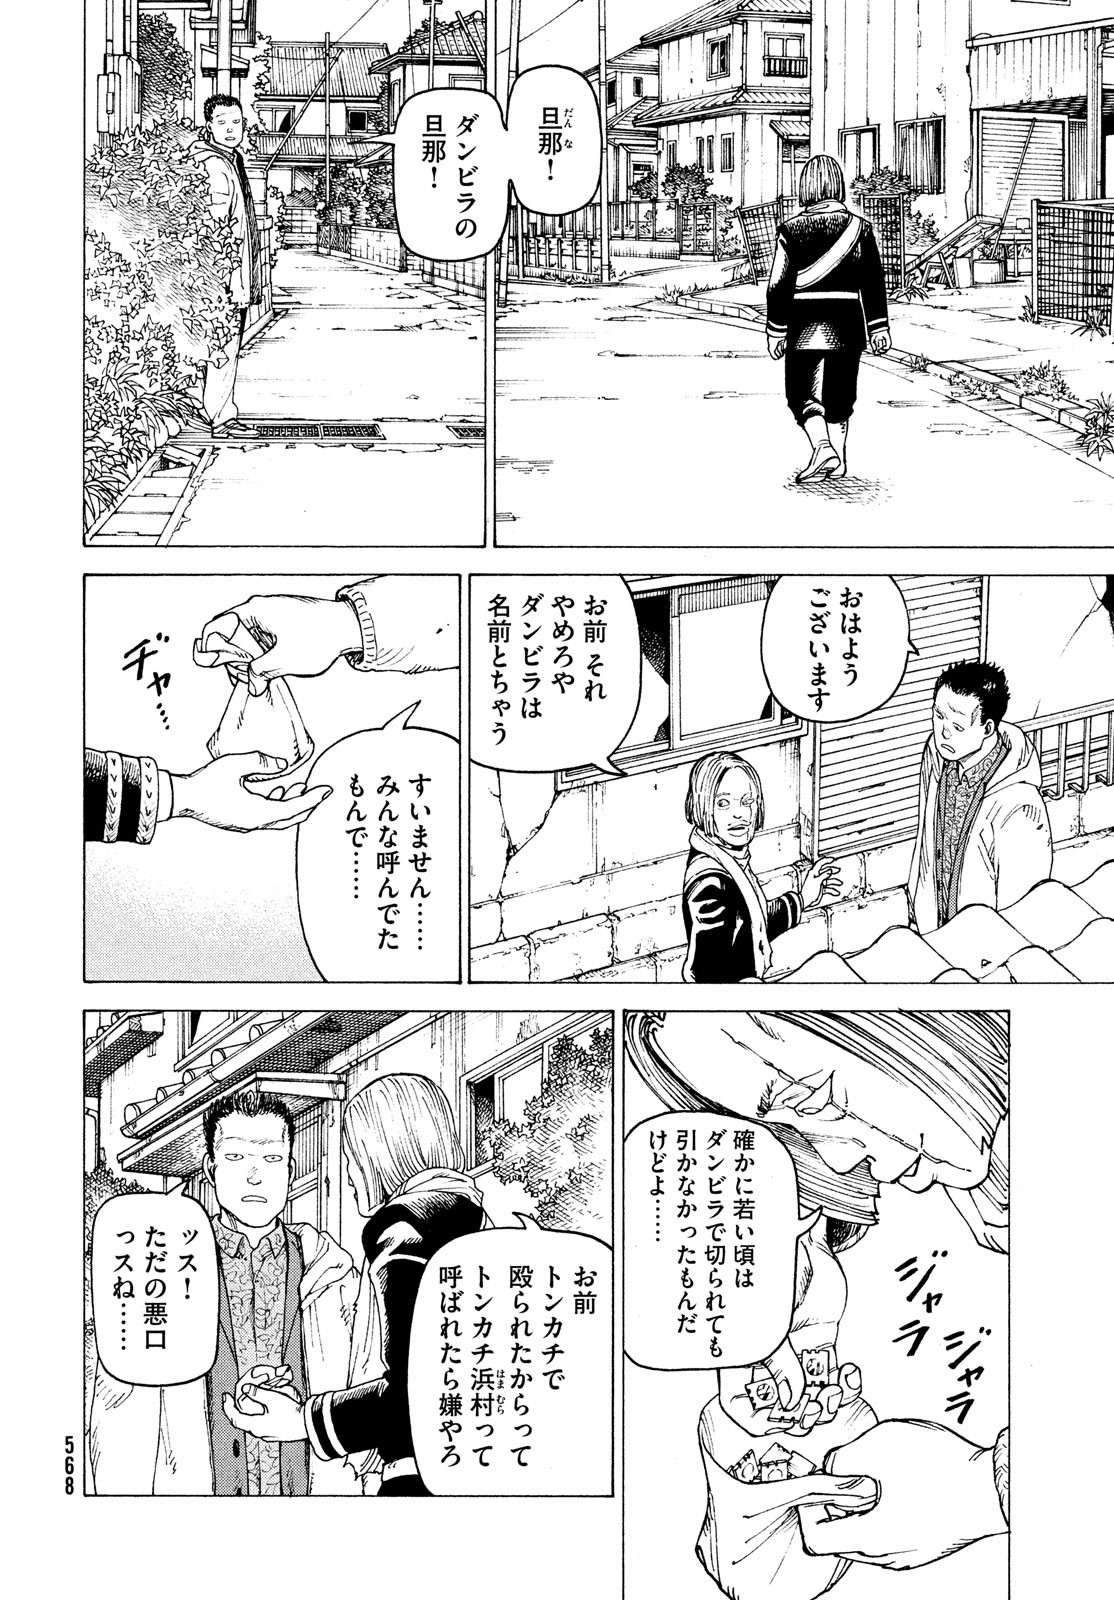 Tengoku Daimakyou 51, Tengoku Daimakyou 51 Page 1 - Read Free Manga Online  at Ten Manga